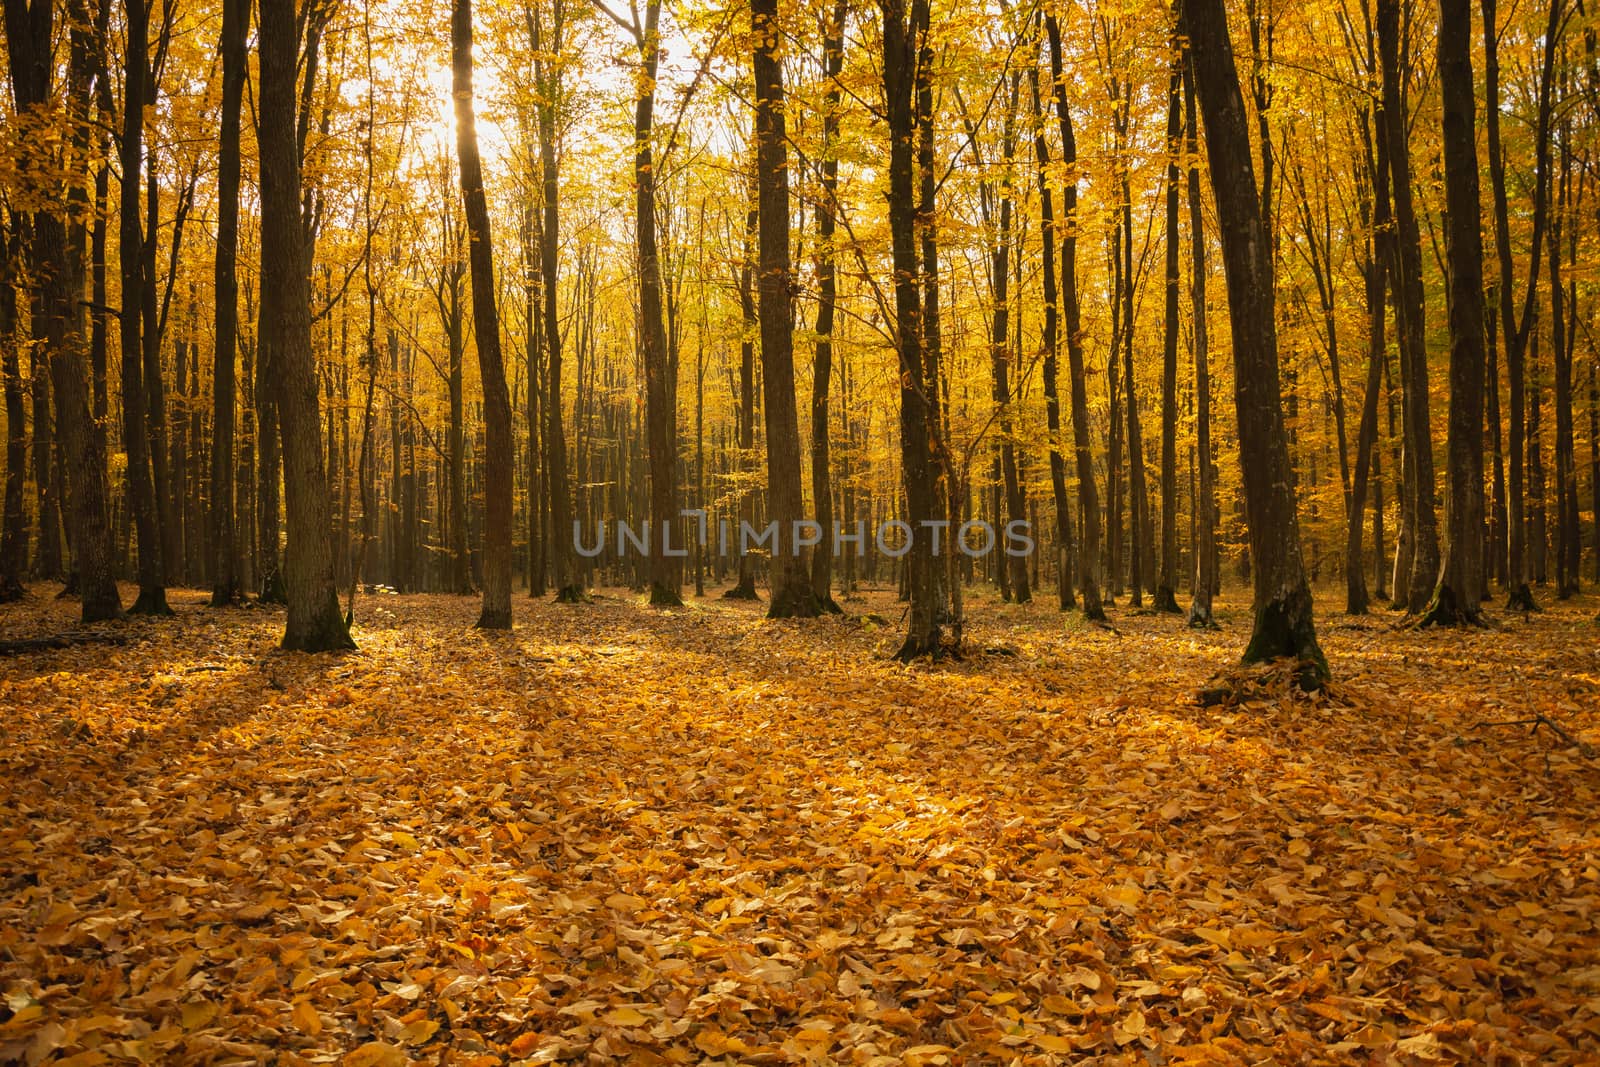 Autumn orange forest with fallen leaves by darekb22